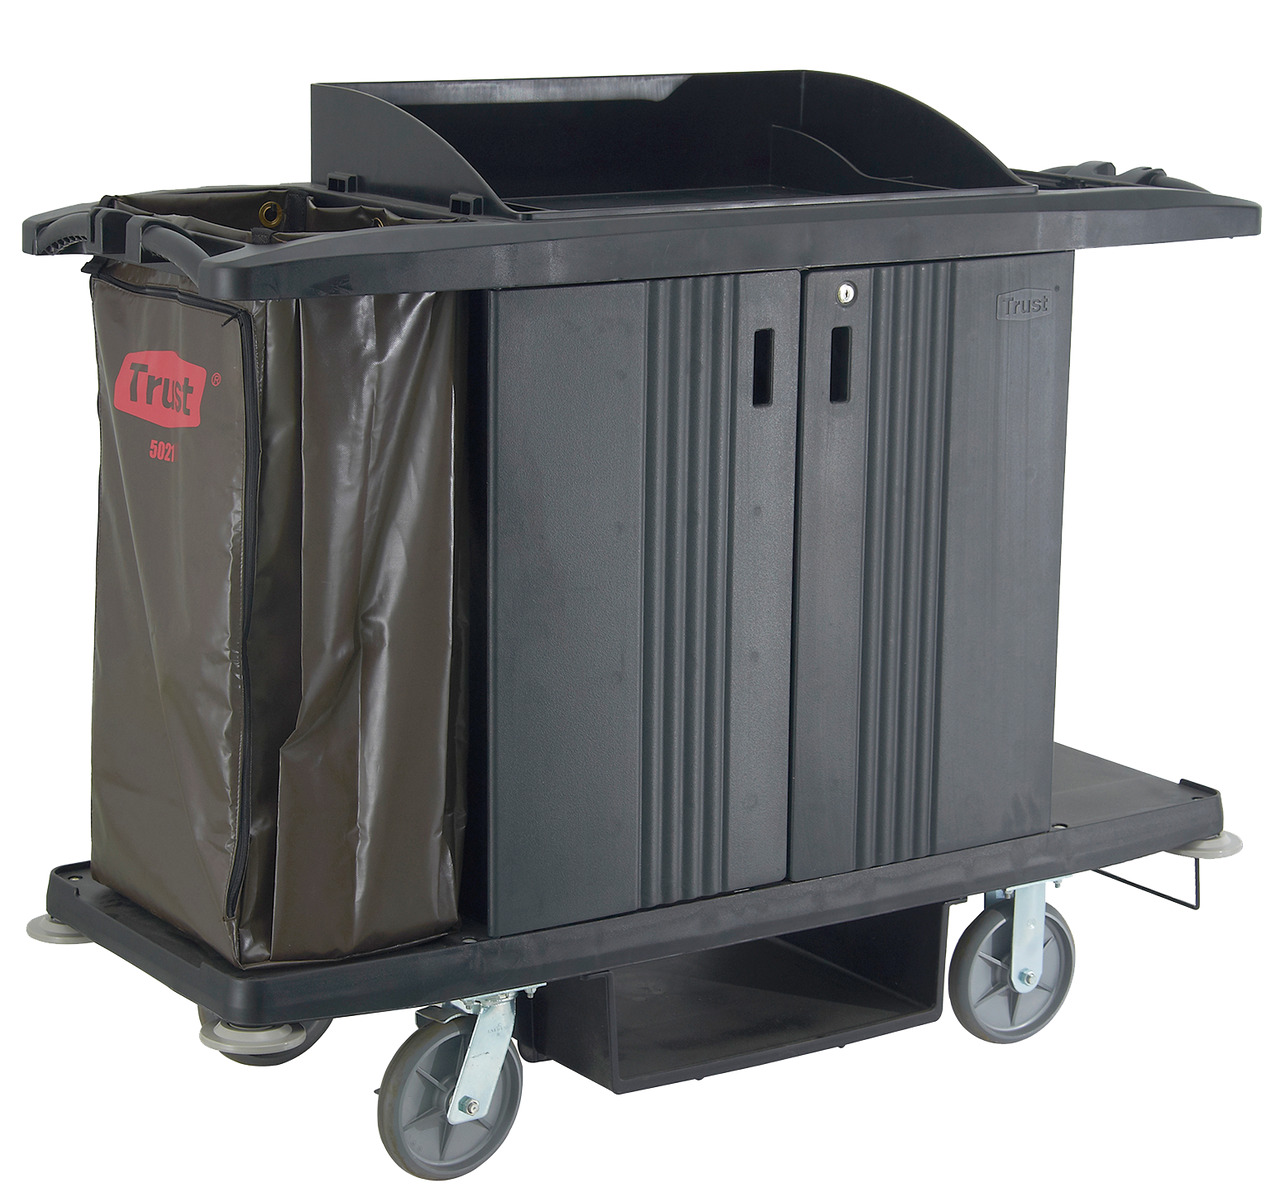 GRANDMAID Executive Housekeeping Cart with Door - Black